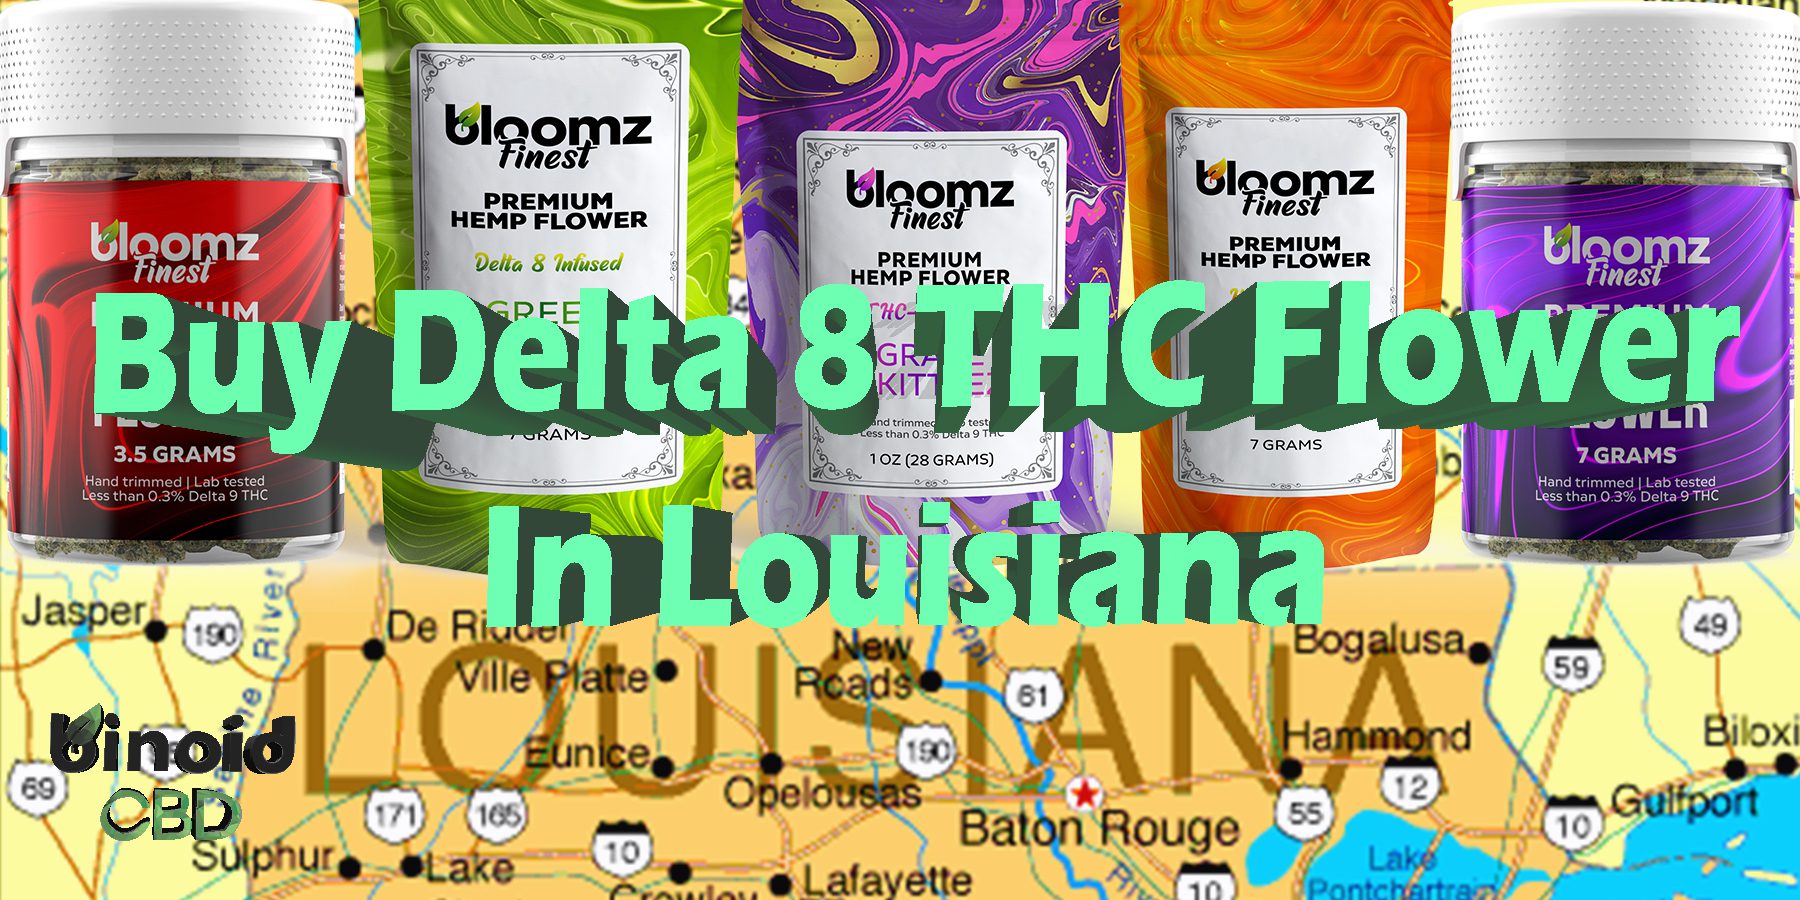 Buy Delta 8 THC Hemp Flower Louisiana Get Near Me Best Price Place To Get Legal Reddit